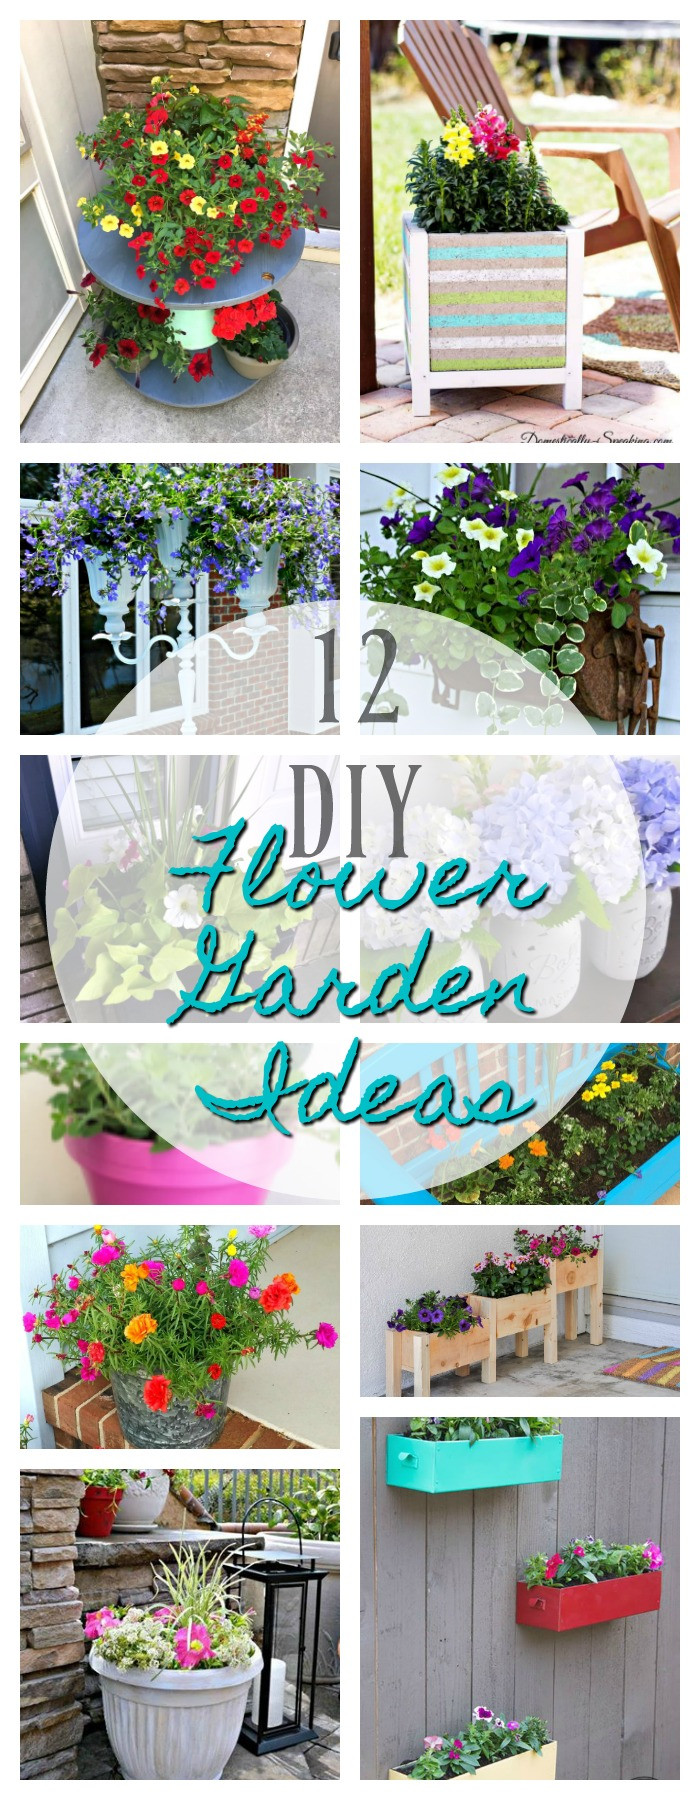 Best ideas about DIY Flower Garden
. Save or Pin 12 DIY Flower Garden Ideas DIY Housewives Series 2 Now.